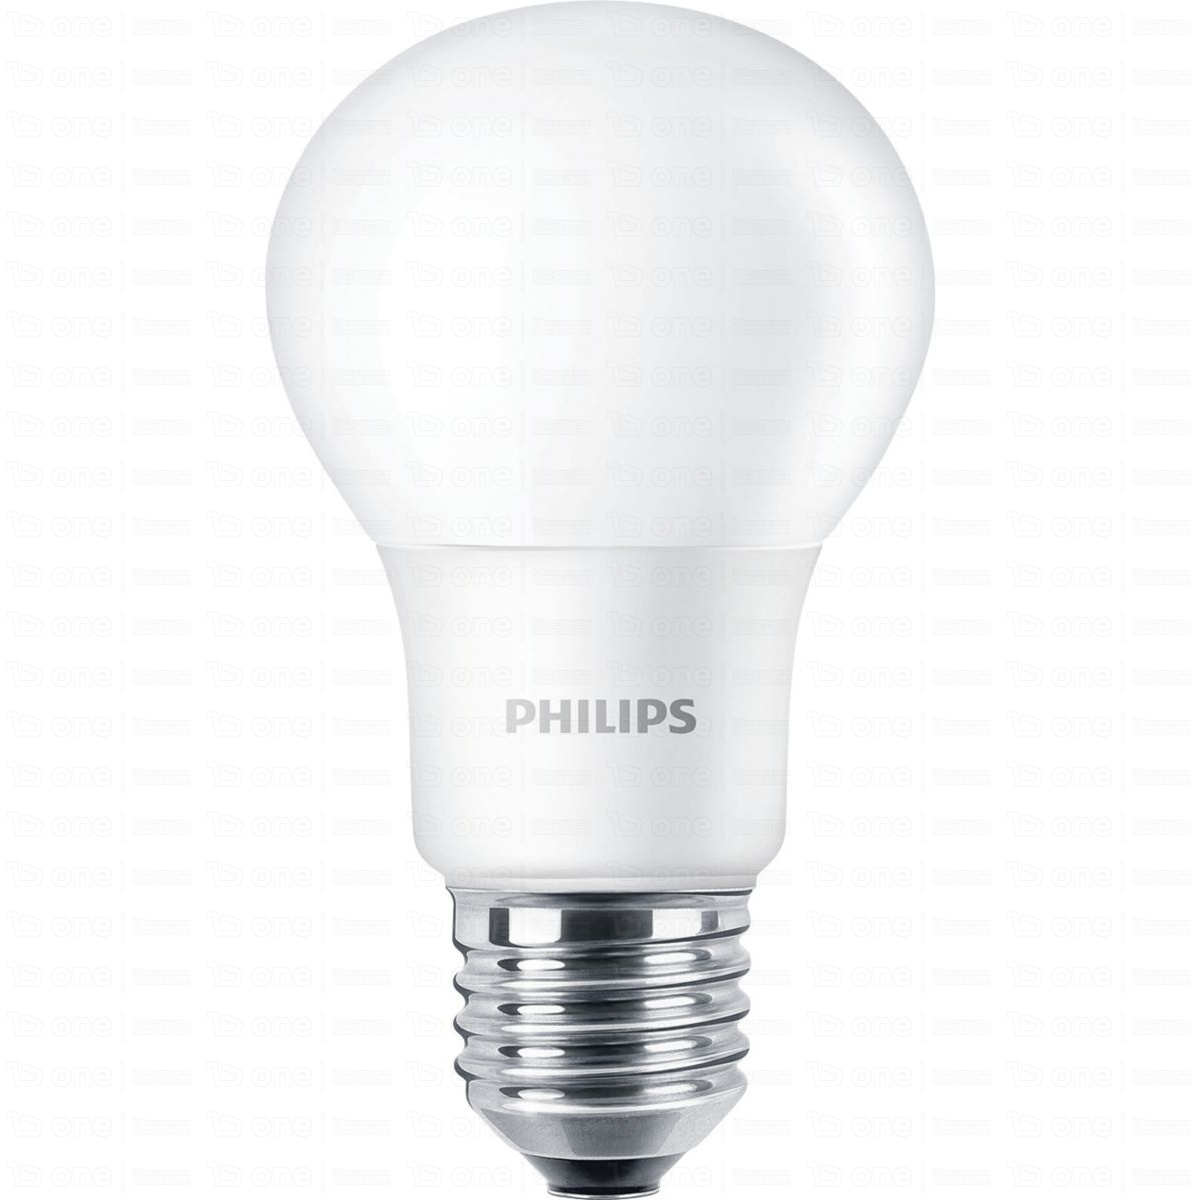 CorePro LEDbulb ND 5-40W A60 E27 840 A+ 4000 K light bulb